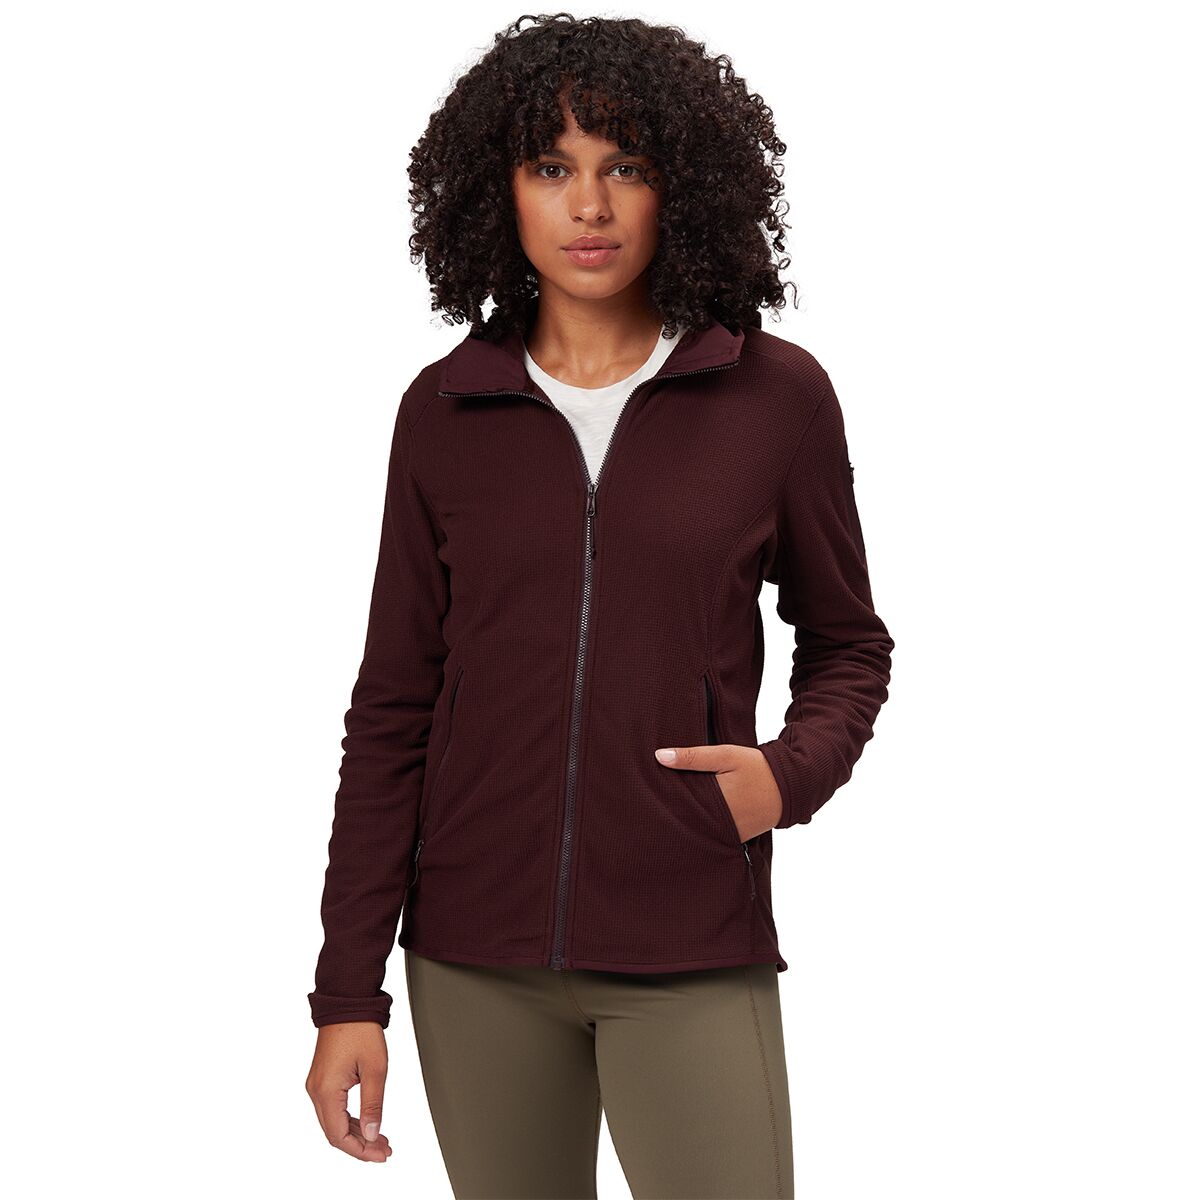 Arc'teryx Delta LT Hooded Fleece Jacket - Women's